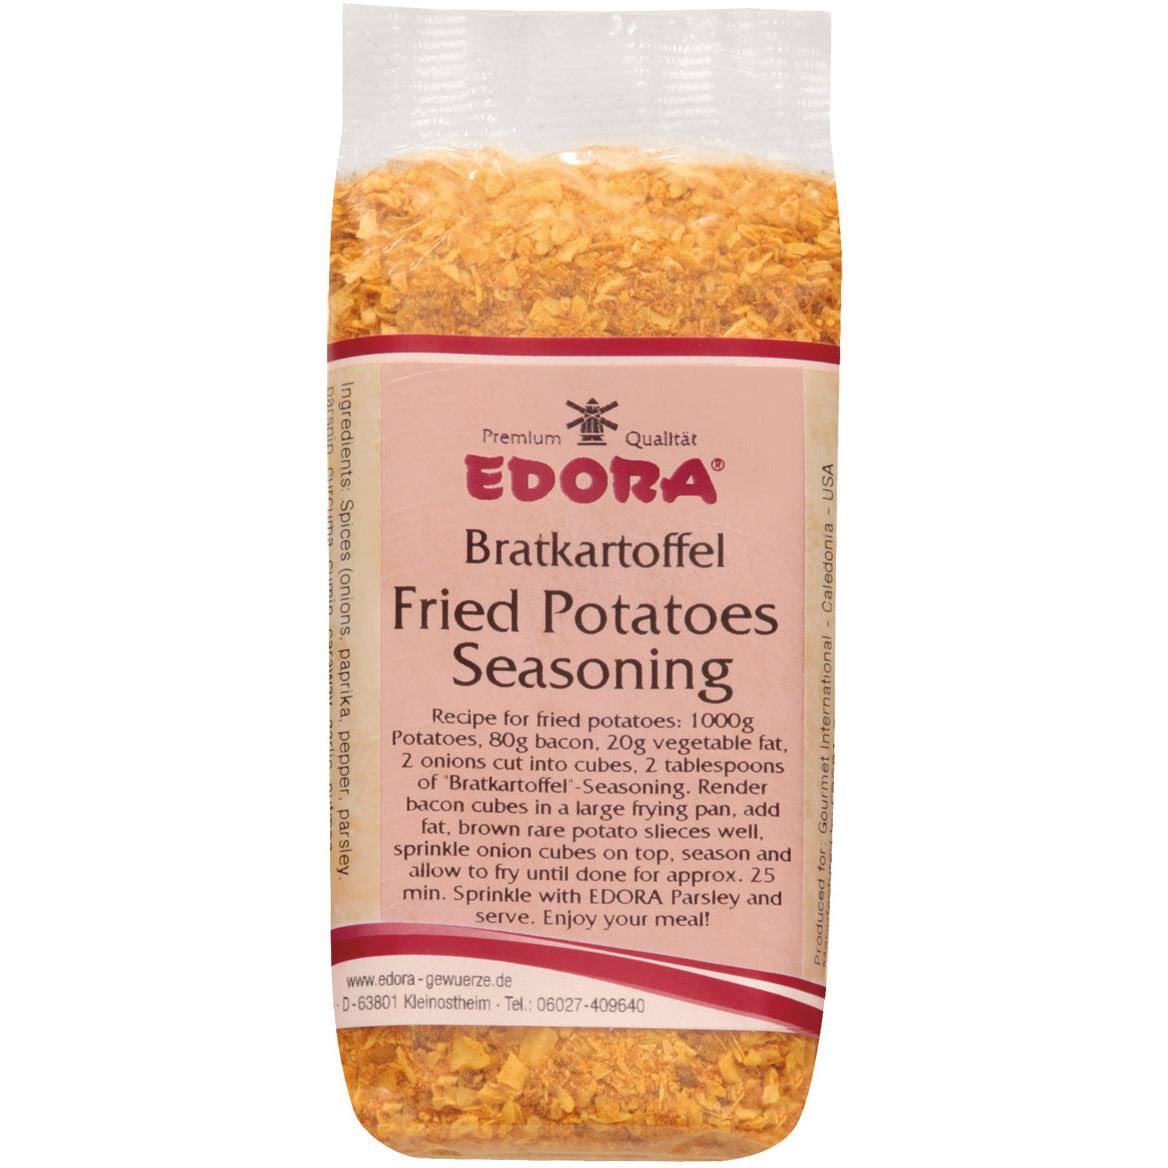 Edora Fried Potatoes Seasoning - Bratkartoffel 100g